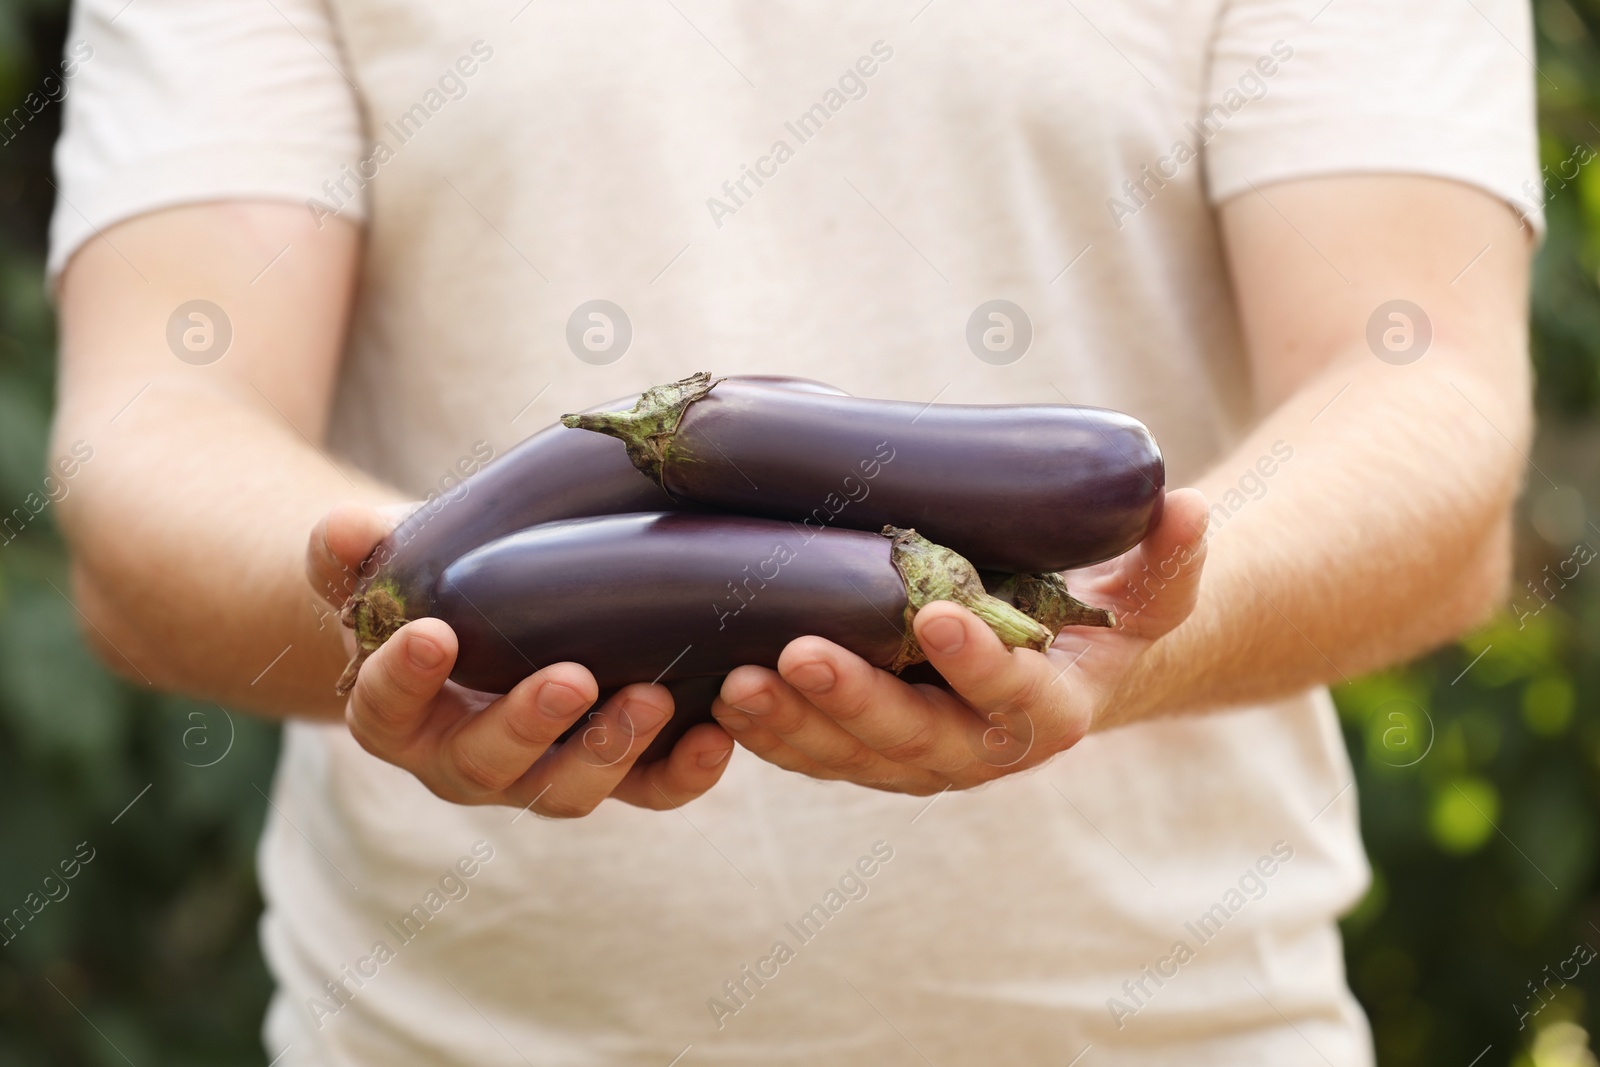 Photo of Man holding ripe eggplants on blurred background, closeup